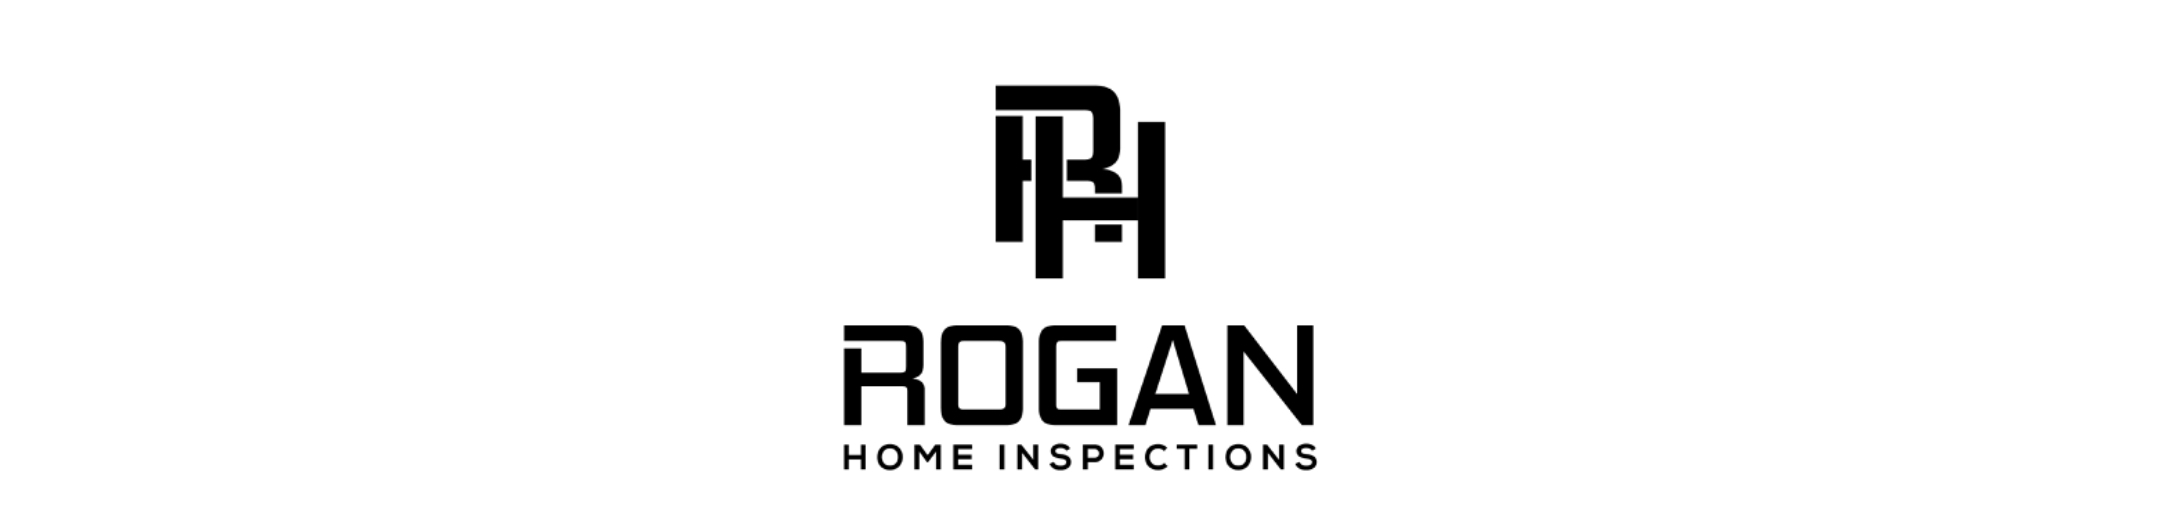 Rogan Home Inspections